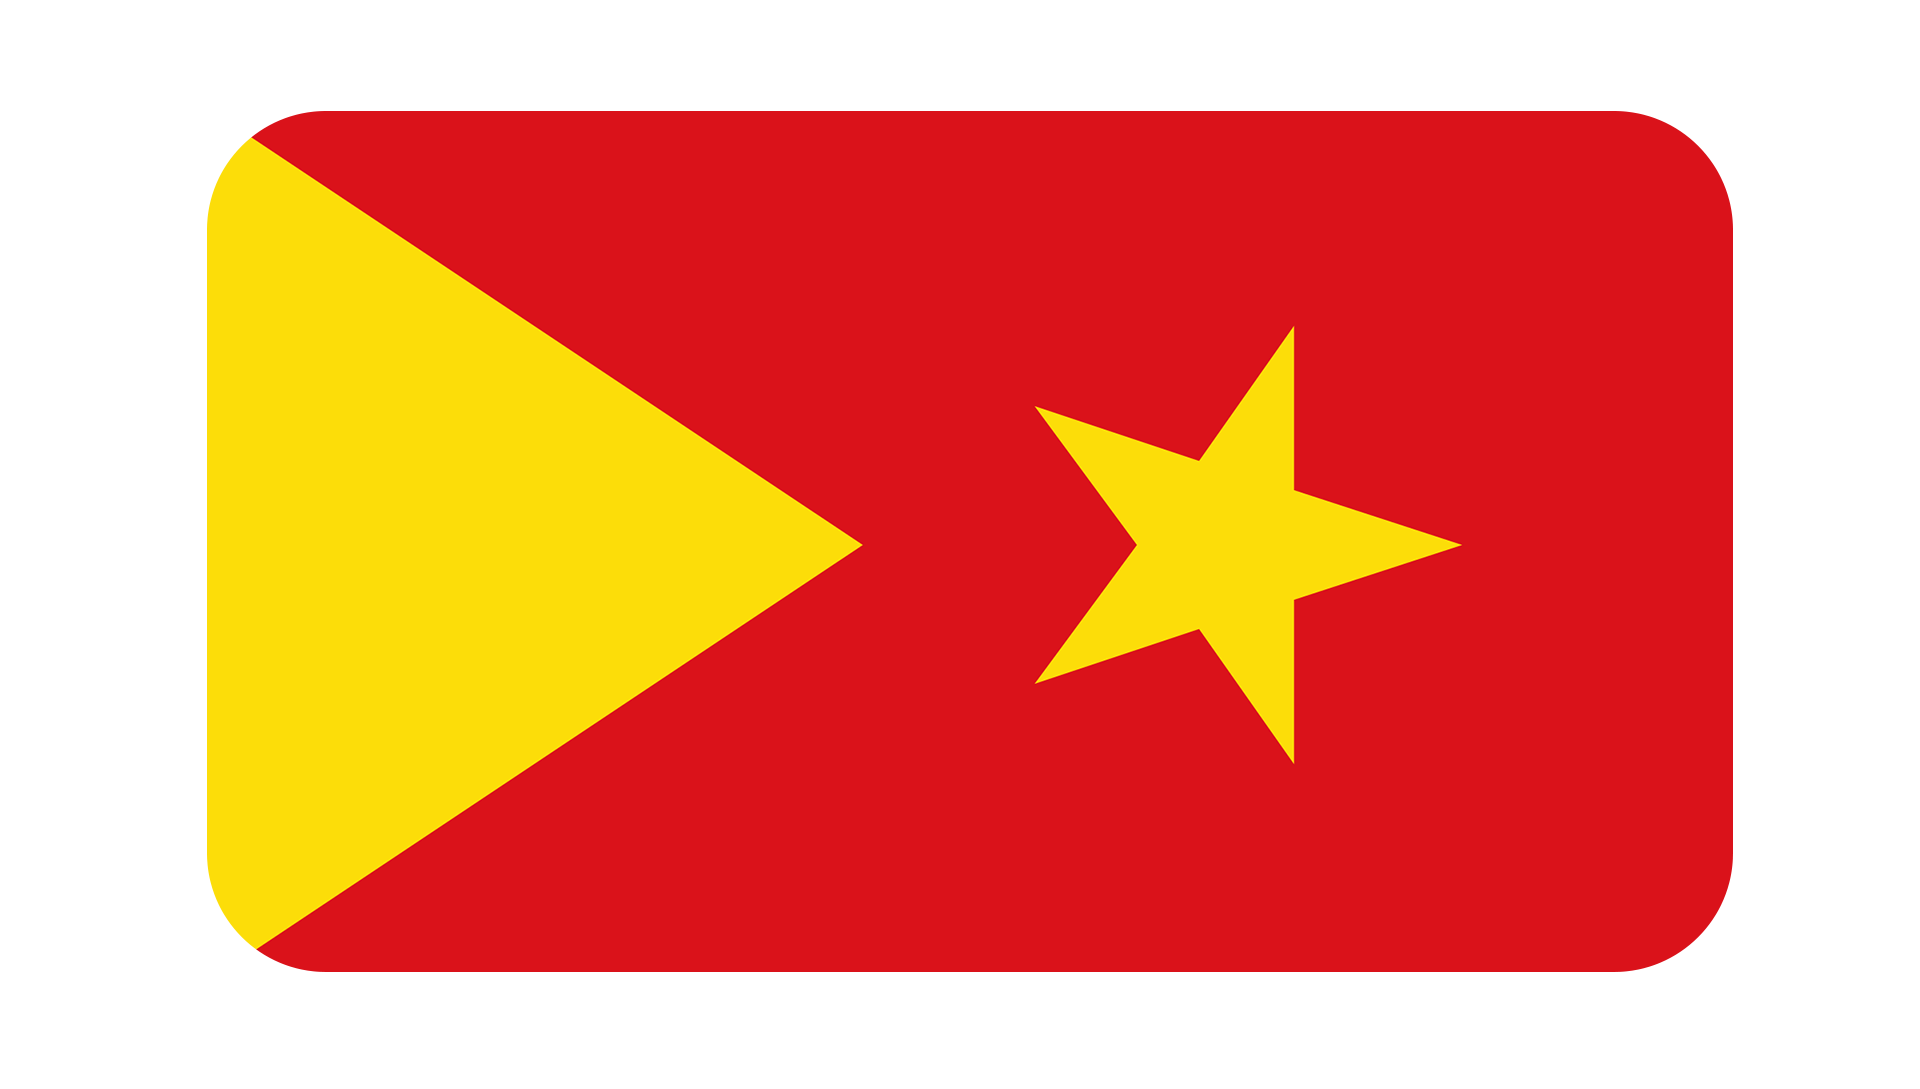 Flag of Tigray